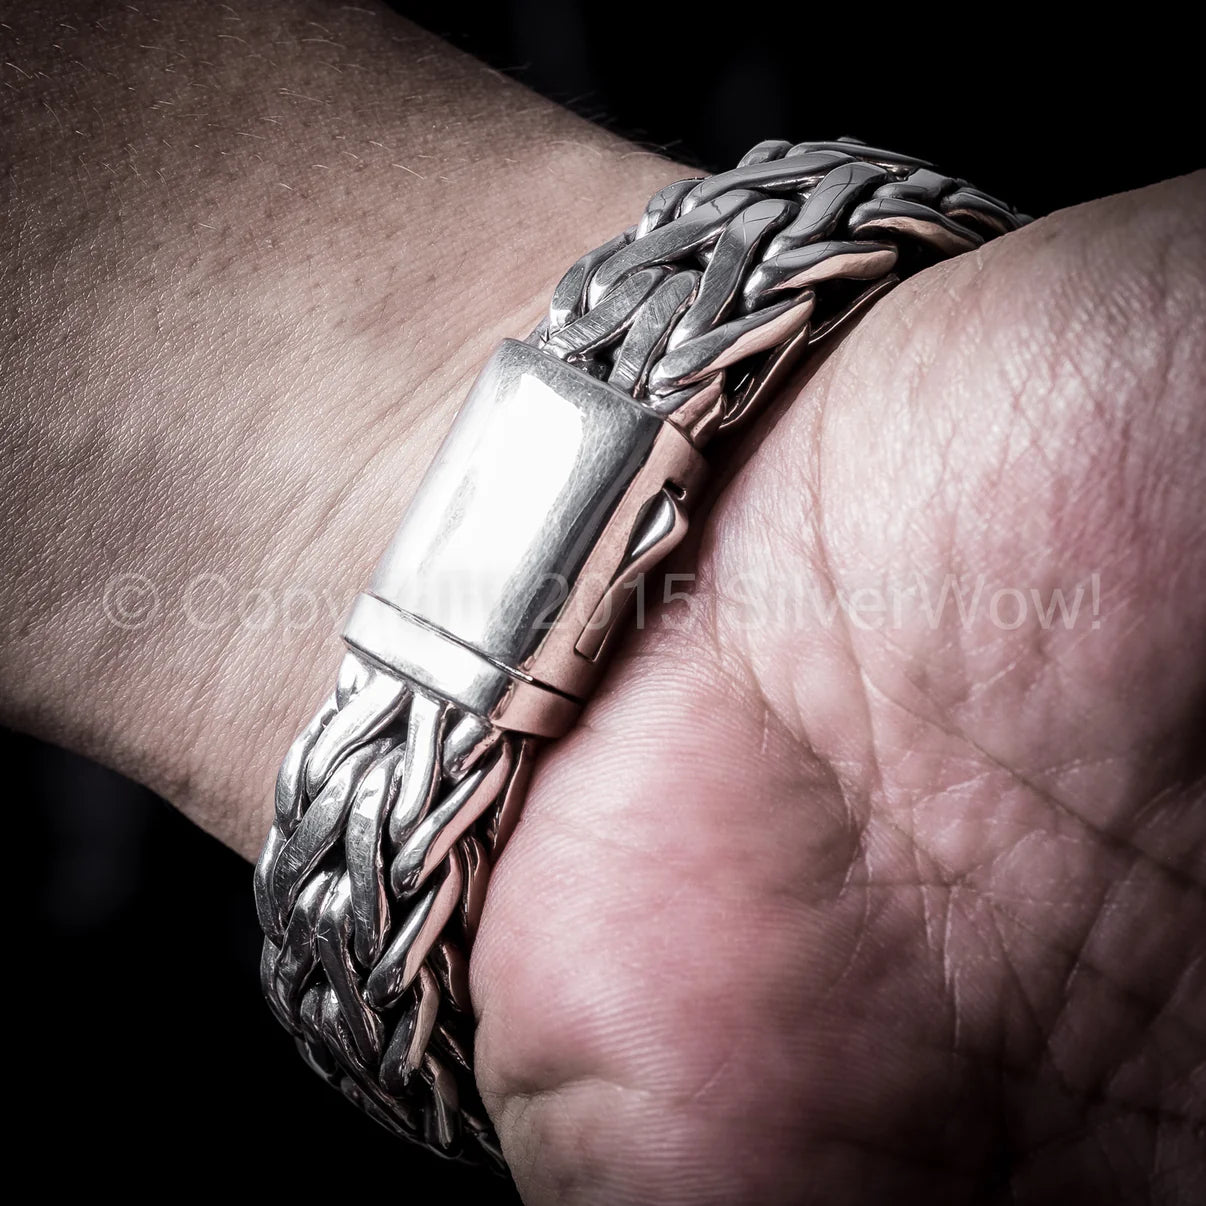 Chunky Sterling Silver Chain Bracelet | HEIDIJHALE